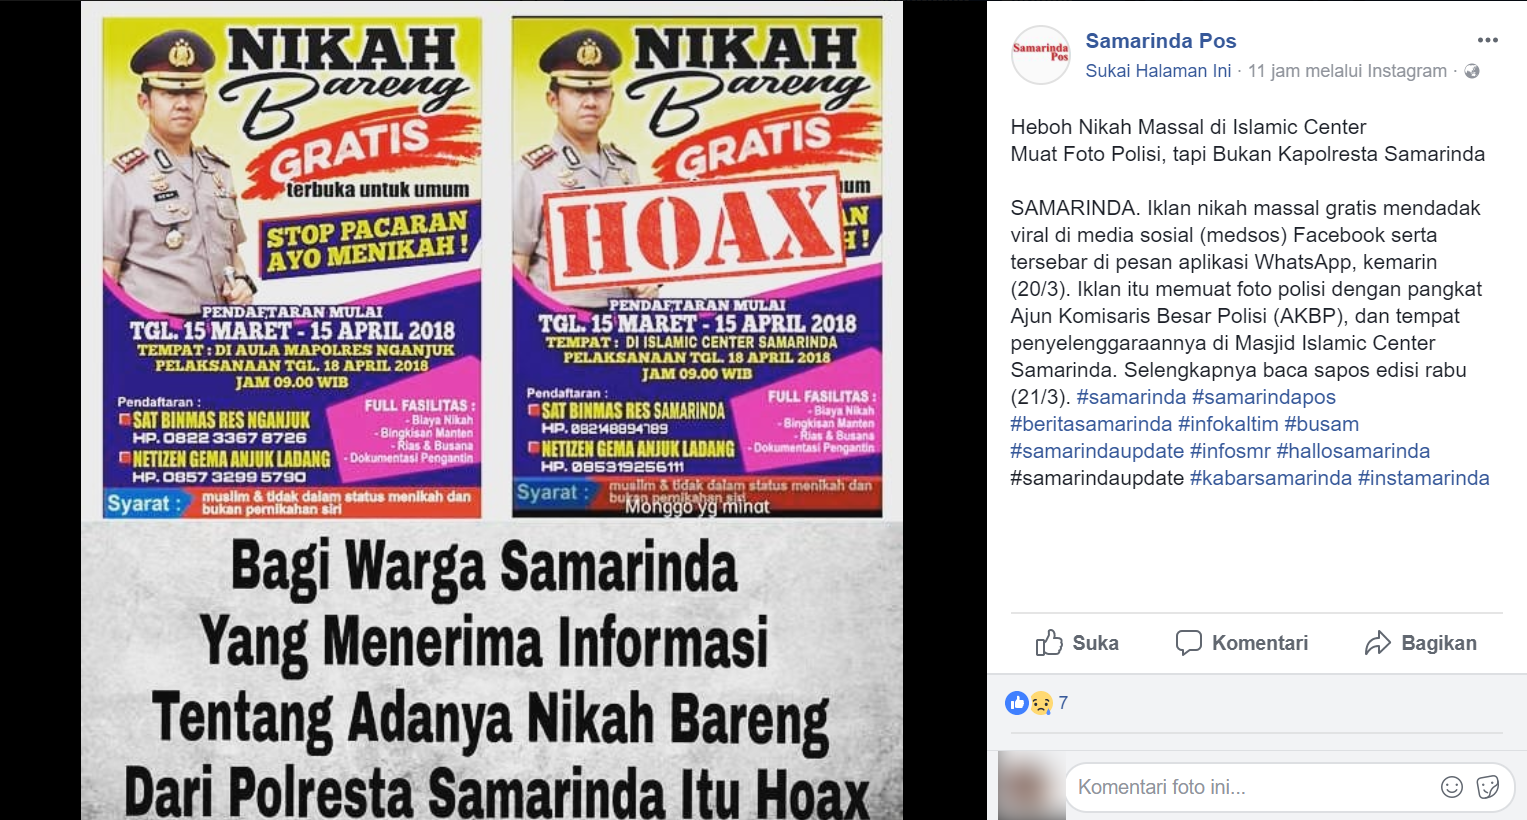 SALAH Polresta Samarinda Adakan Acara Nikah Massal Gratis